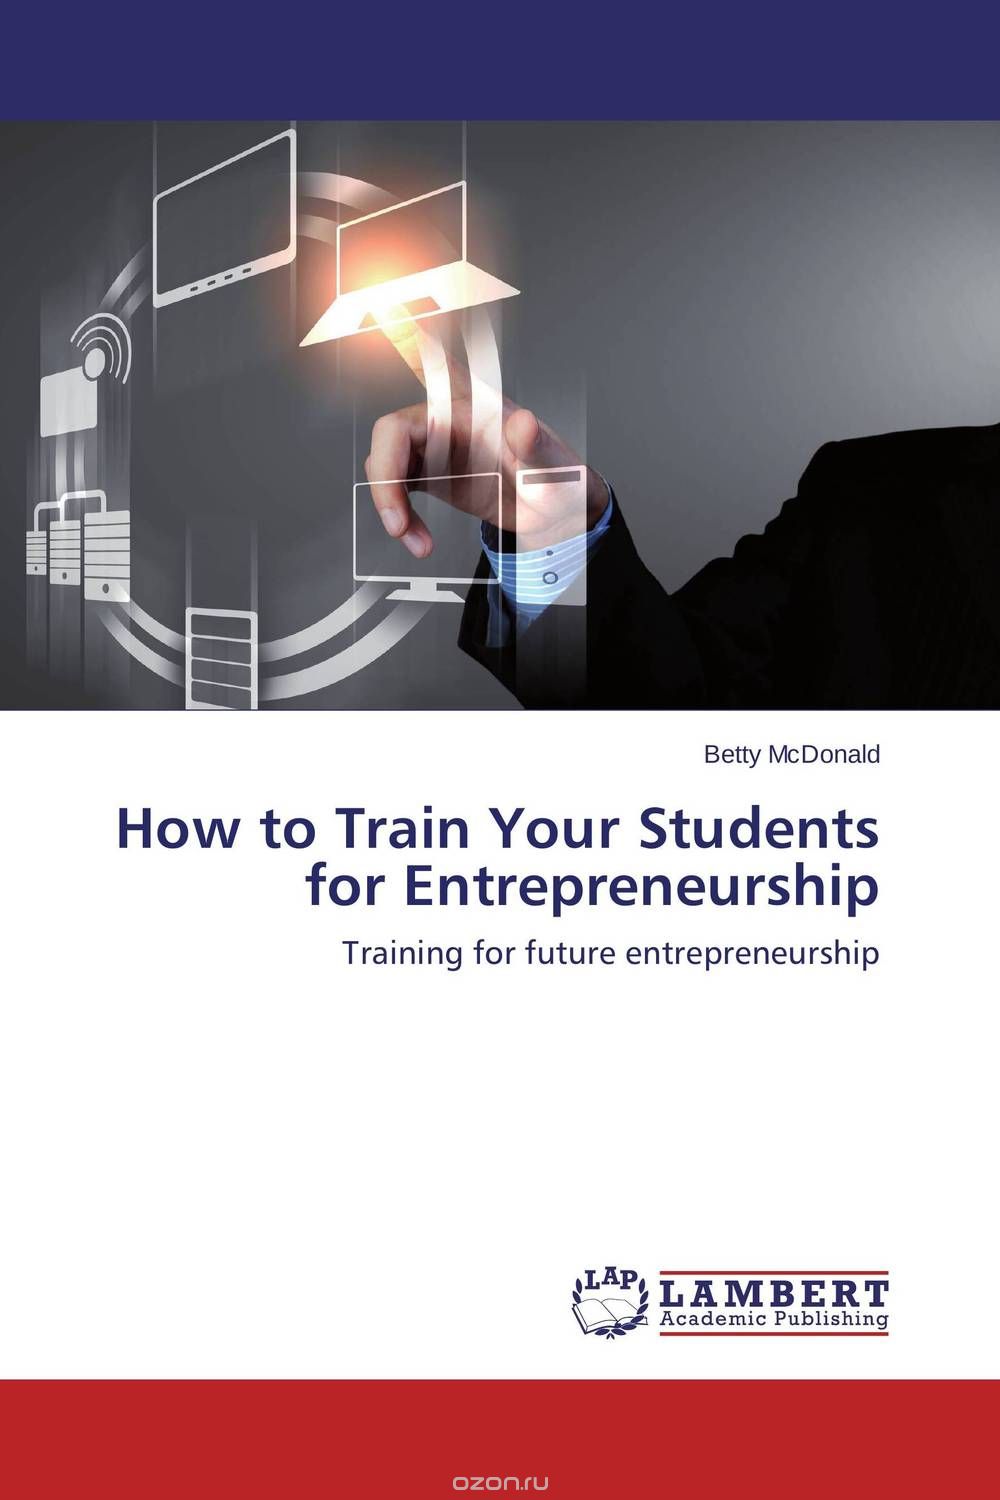 Скачать книгу "How to Train Your Students for Entrepreneurship"